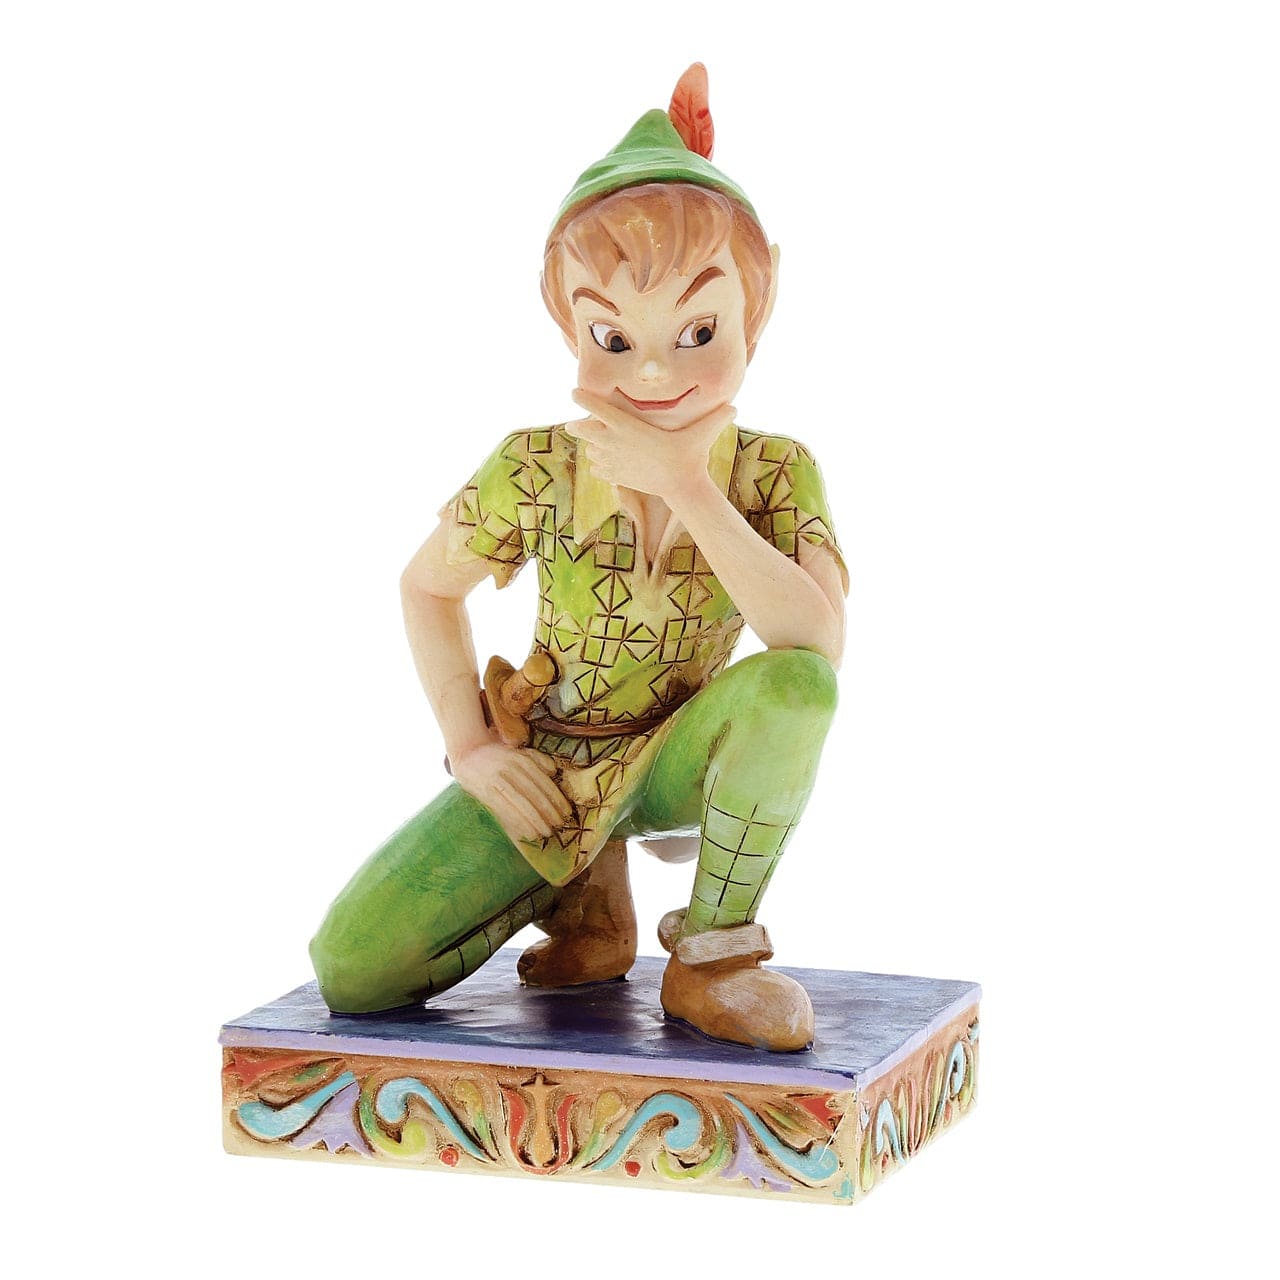 Enesco Disney Ornament Disney Traditions Figurine - Peter Pan - Childhood Champion